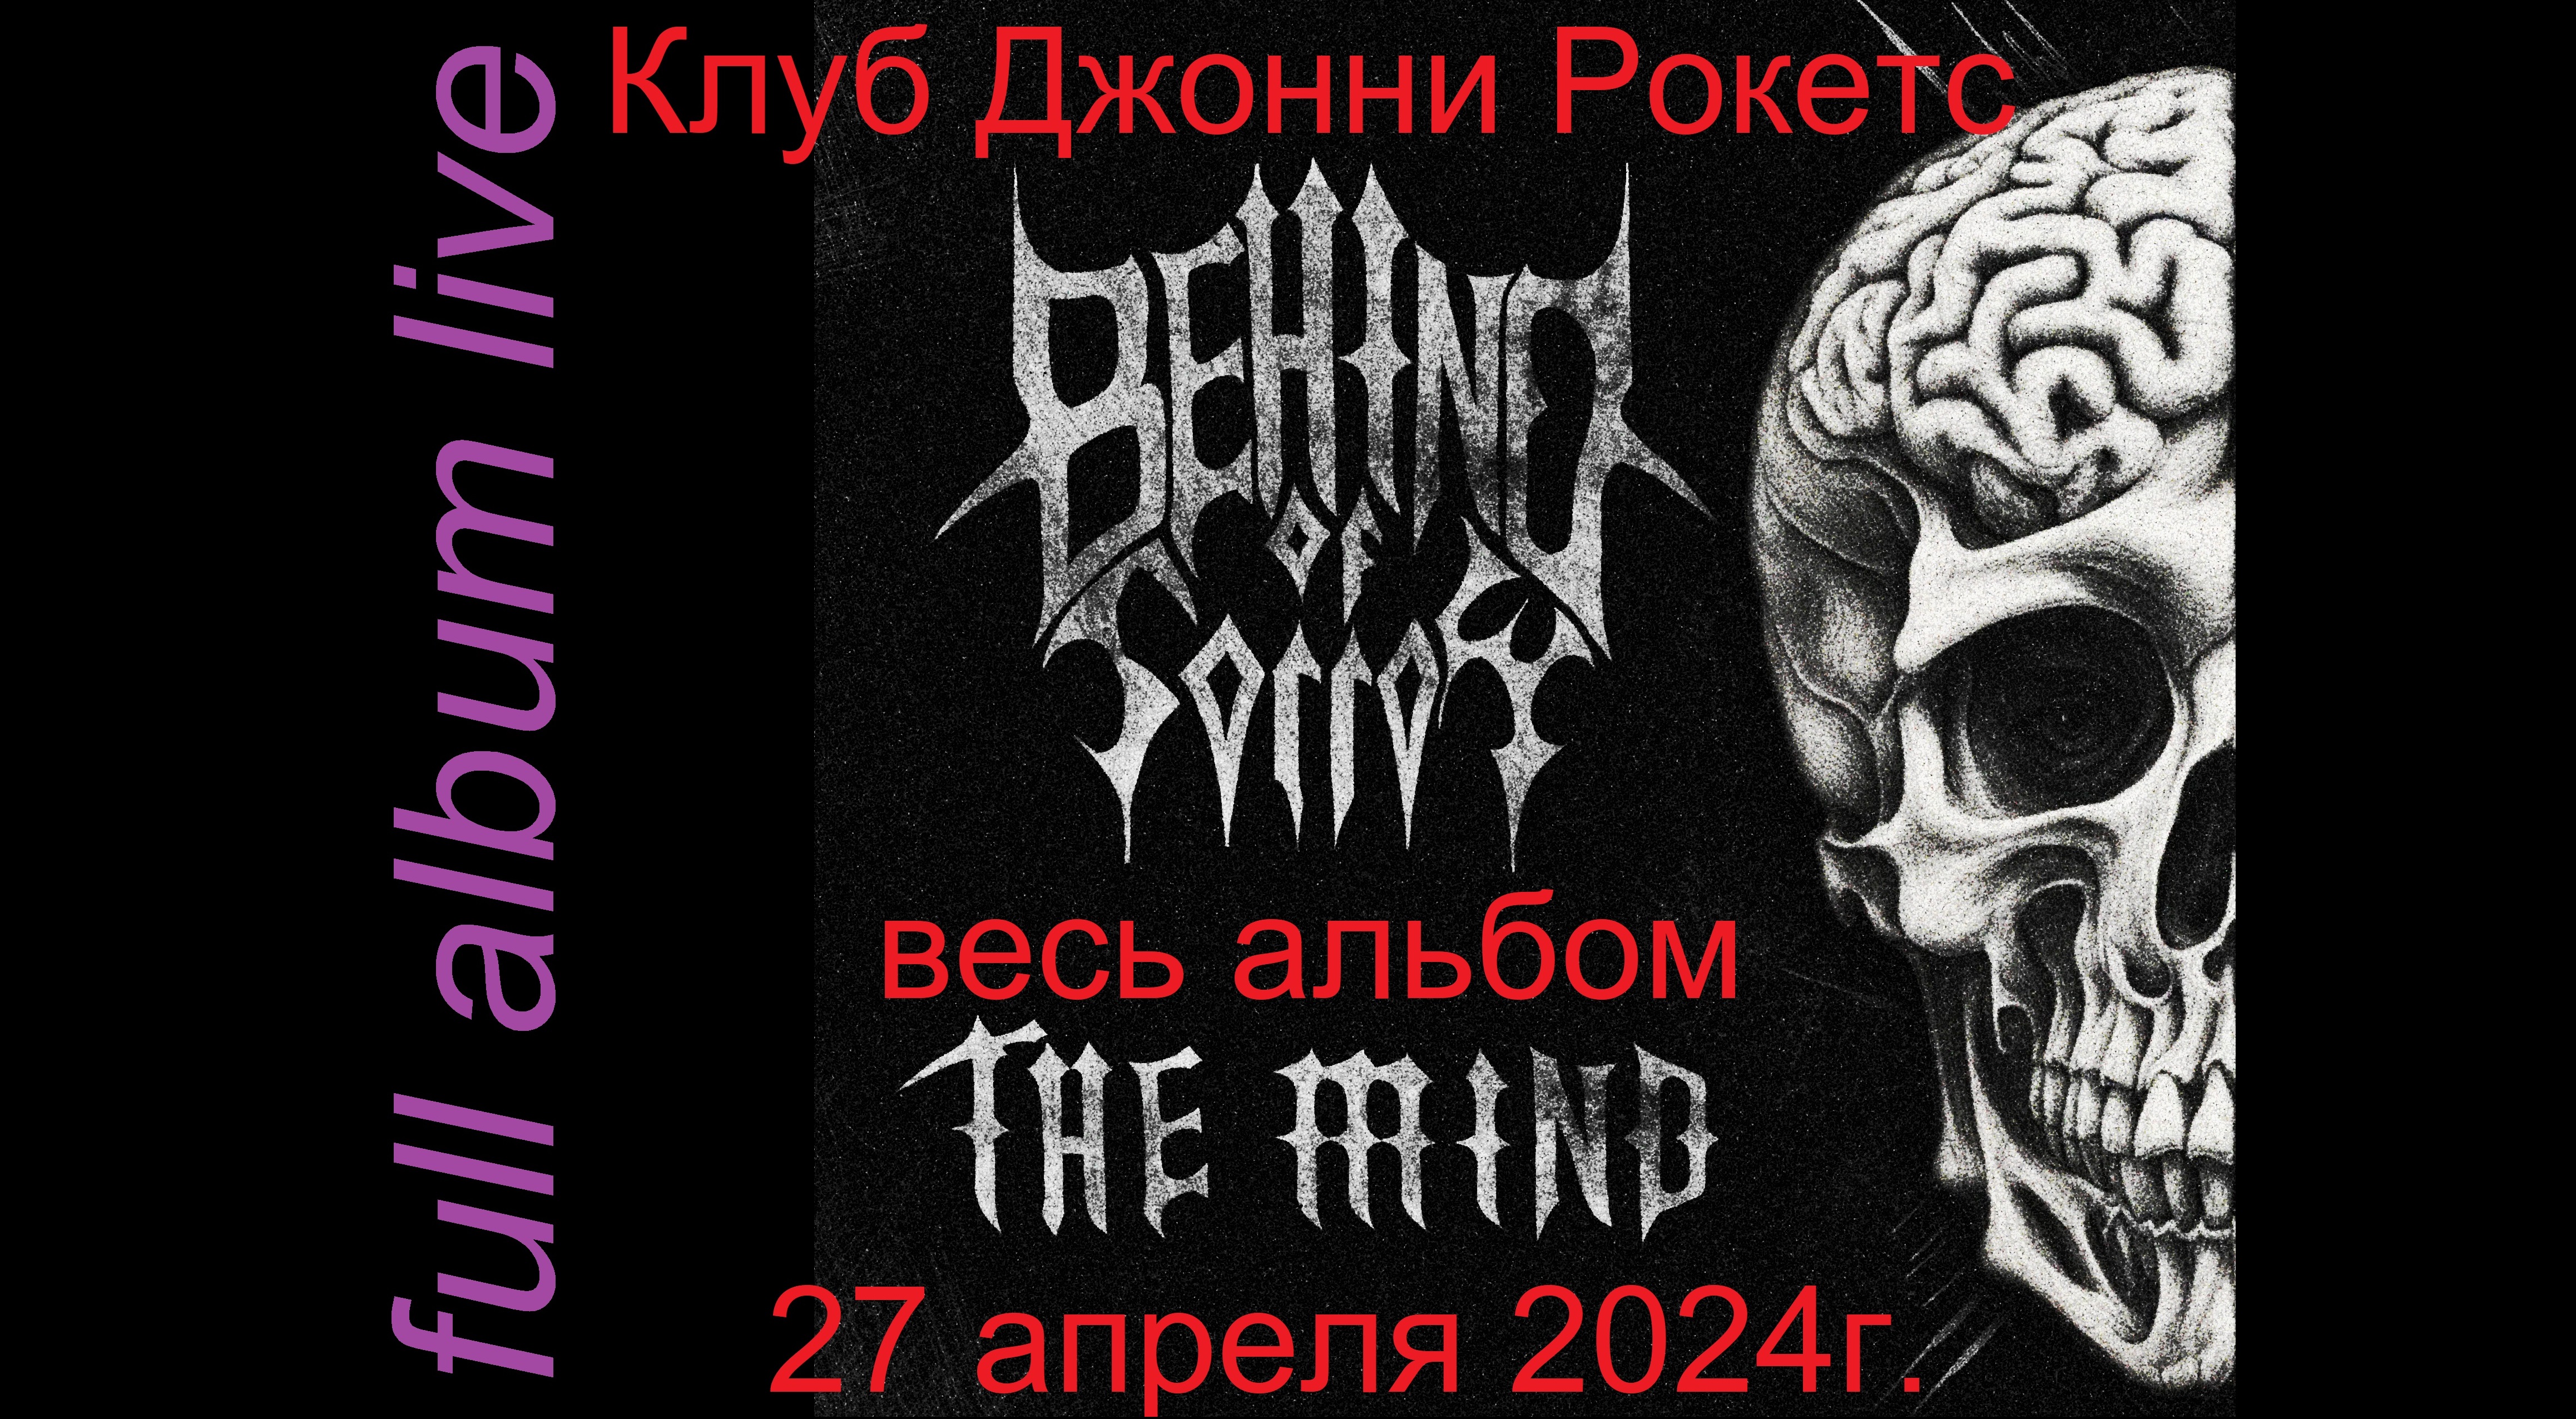 BEHIHD OF SORROW - THE MIND весь альбом концертная запись 27 апреля 2024 г.